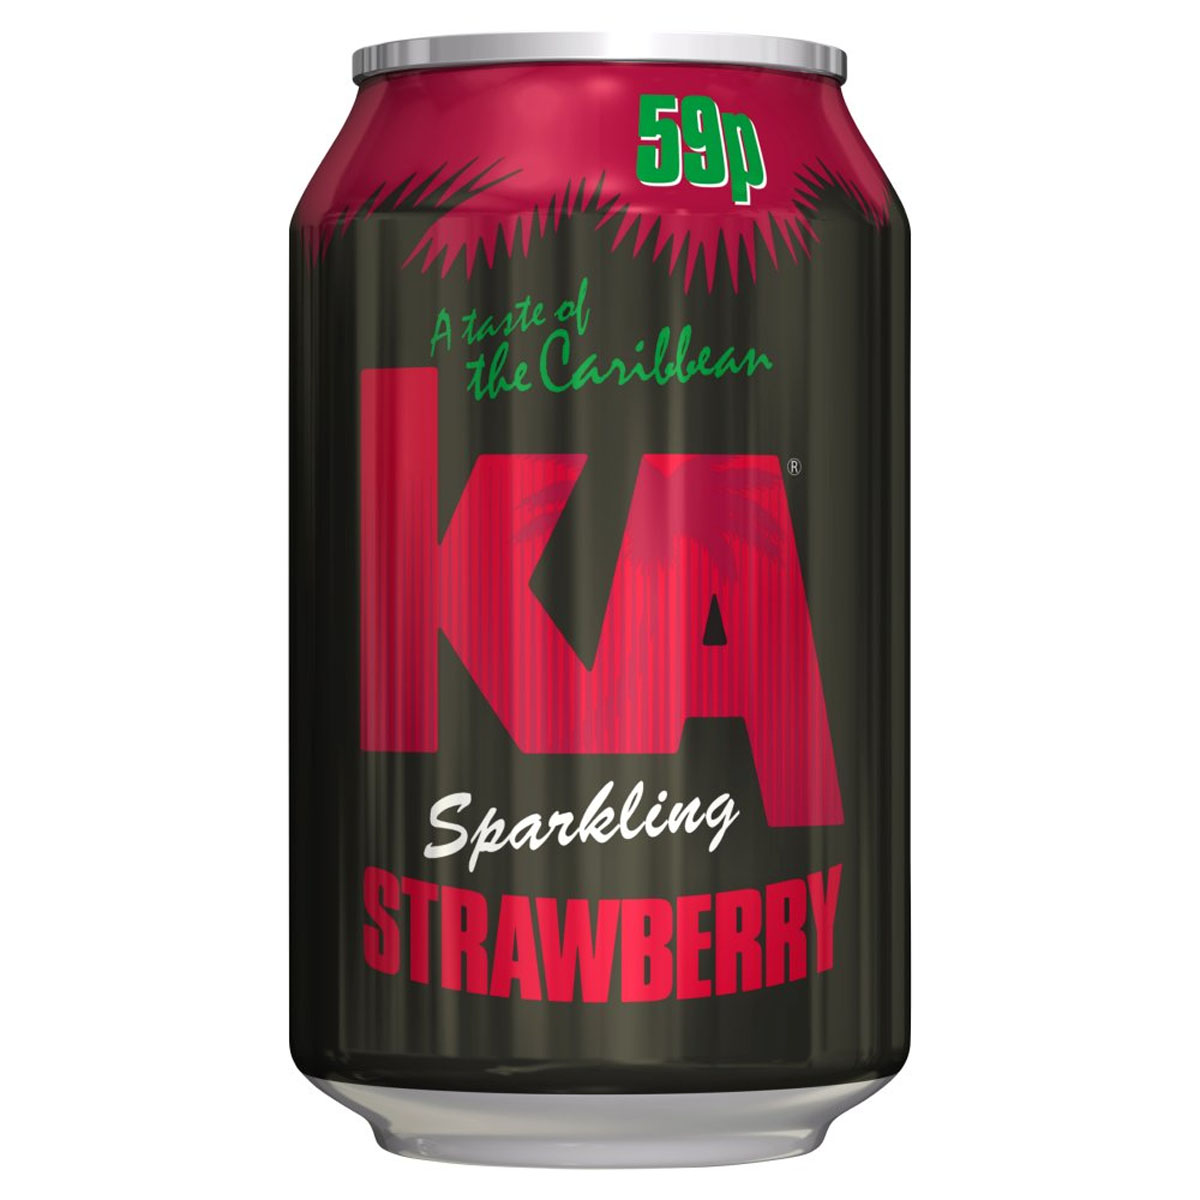 KA - Sparkling Strawberry - 330ml - Continental Food Store